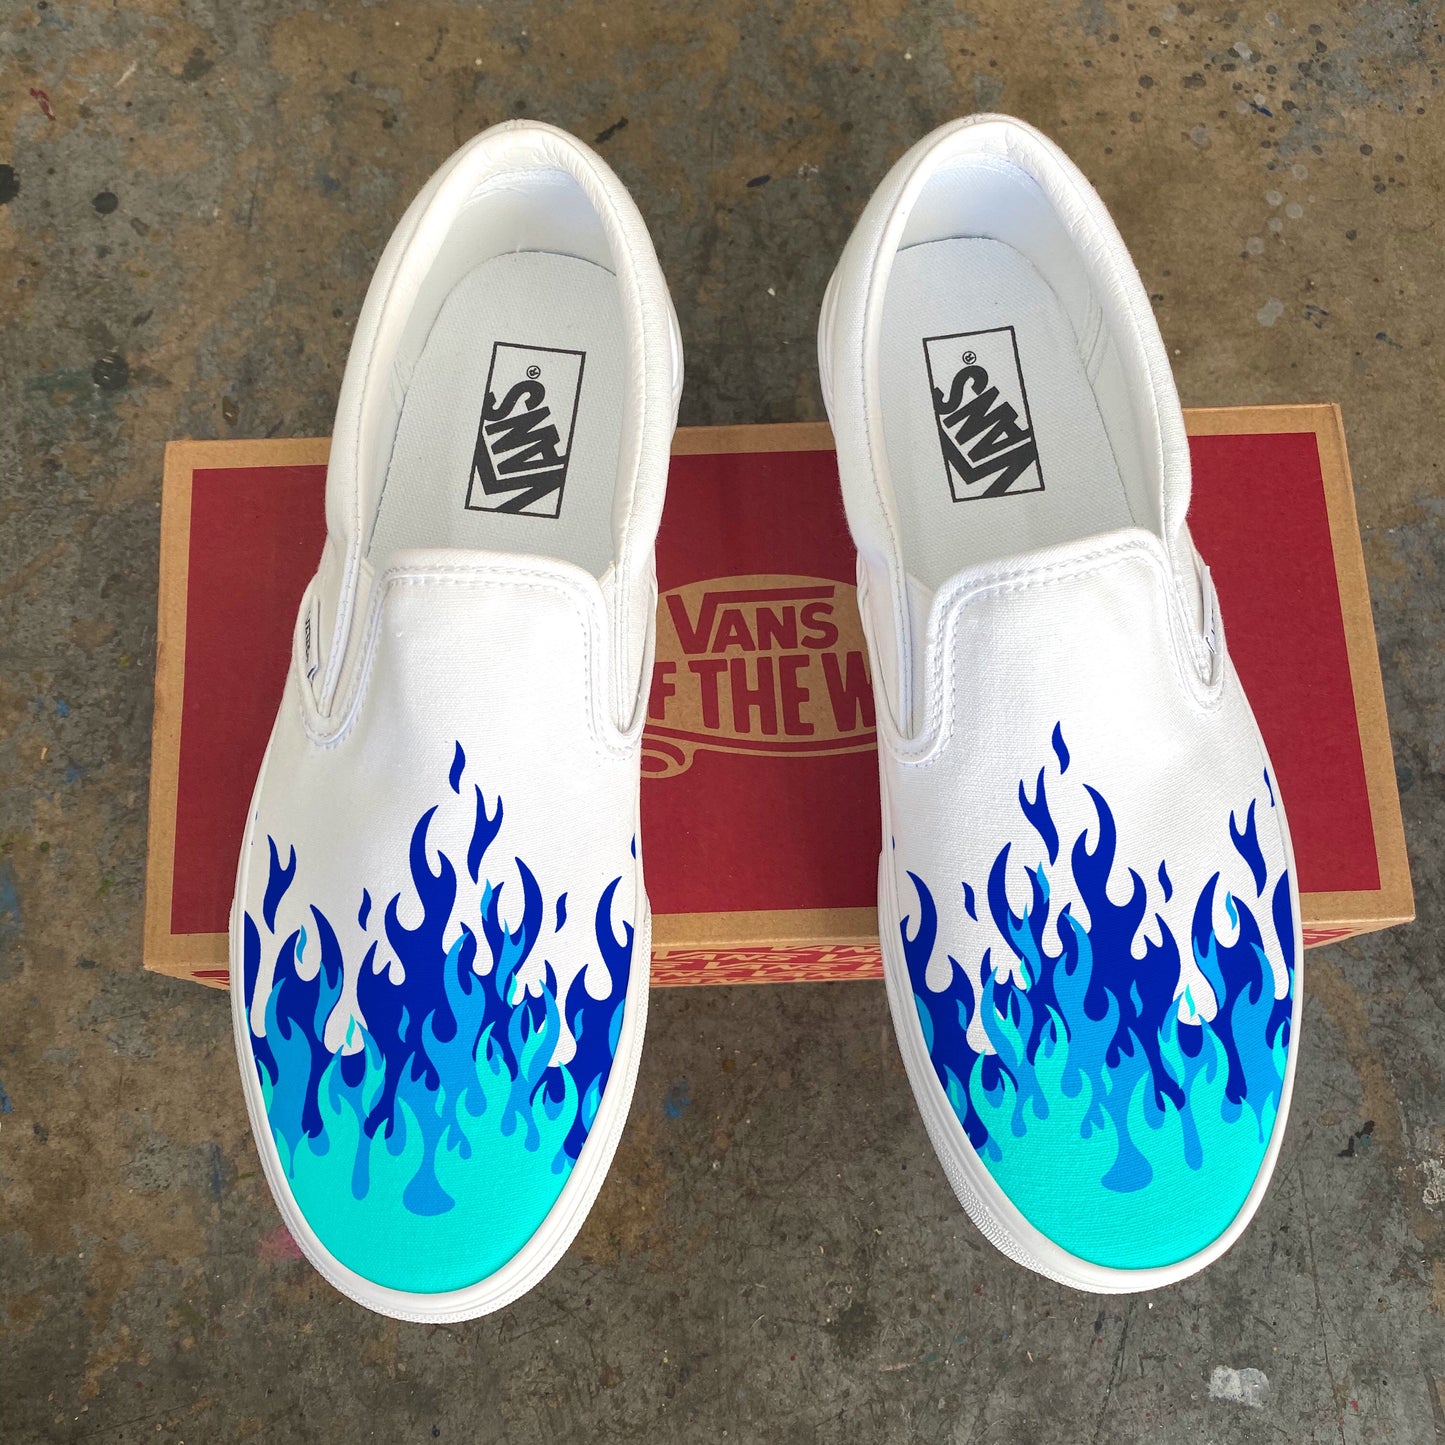 Hot Blue Flame Shoes - Custom Vans White Slip On Shoes